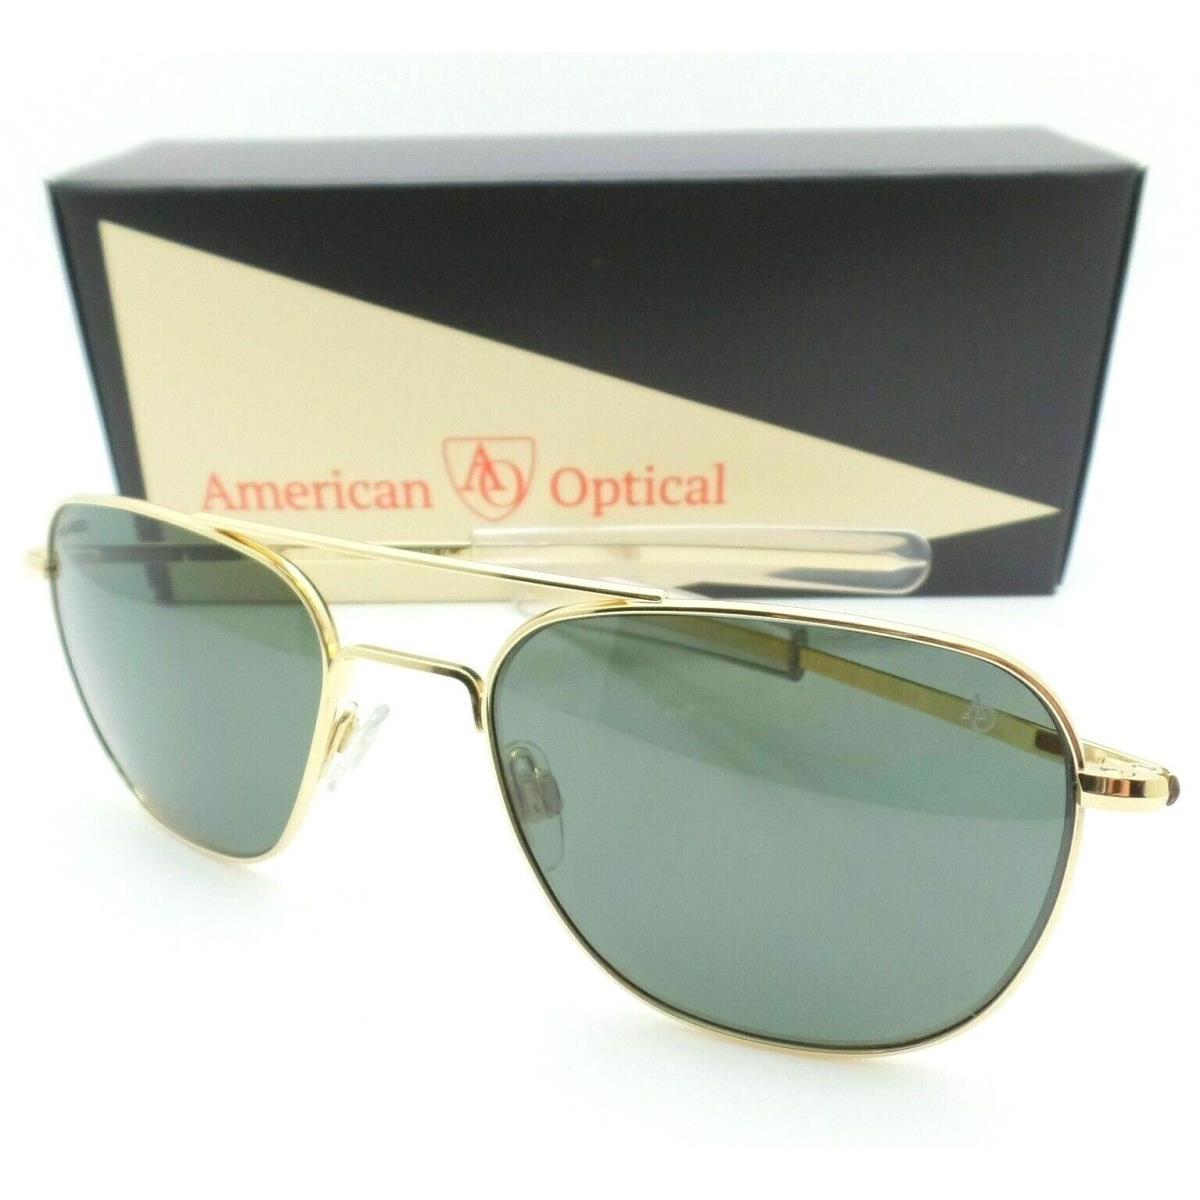 American Optical Original Pilot AO American Optical Pilot 23k Gold Green Lens Options Sunglasses 52/20/140 Glass Polarized